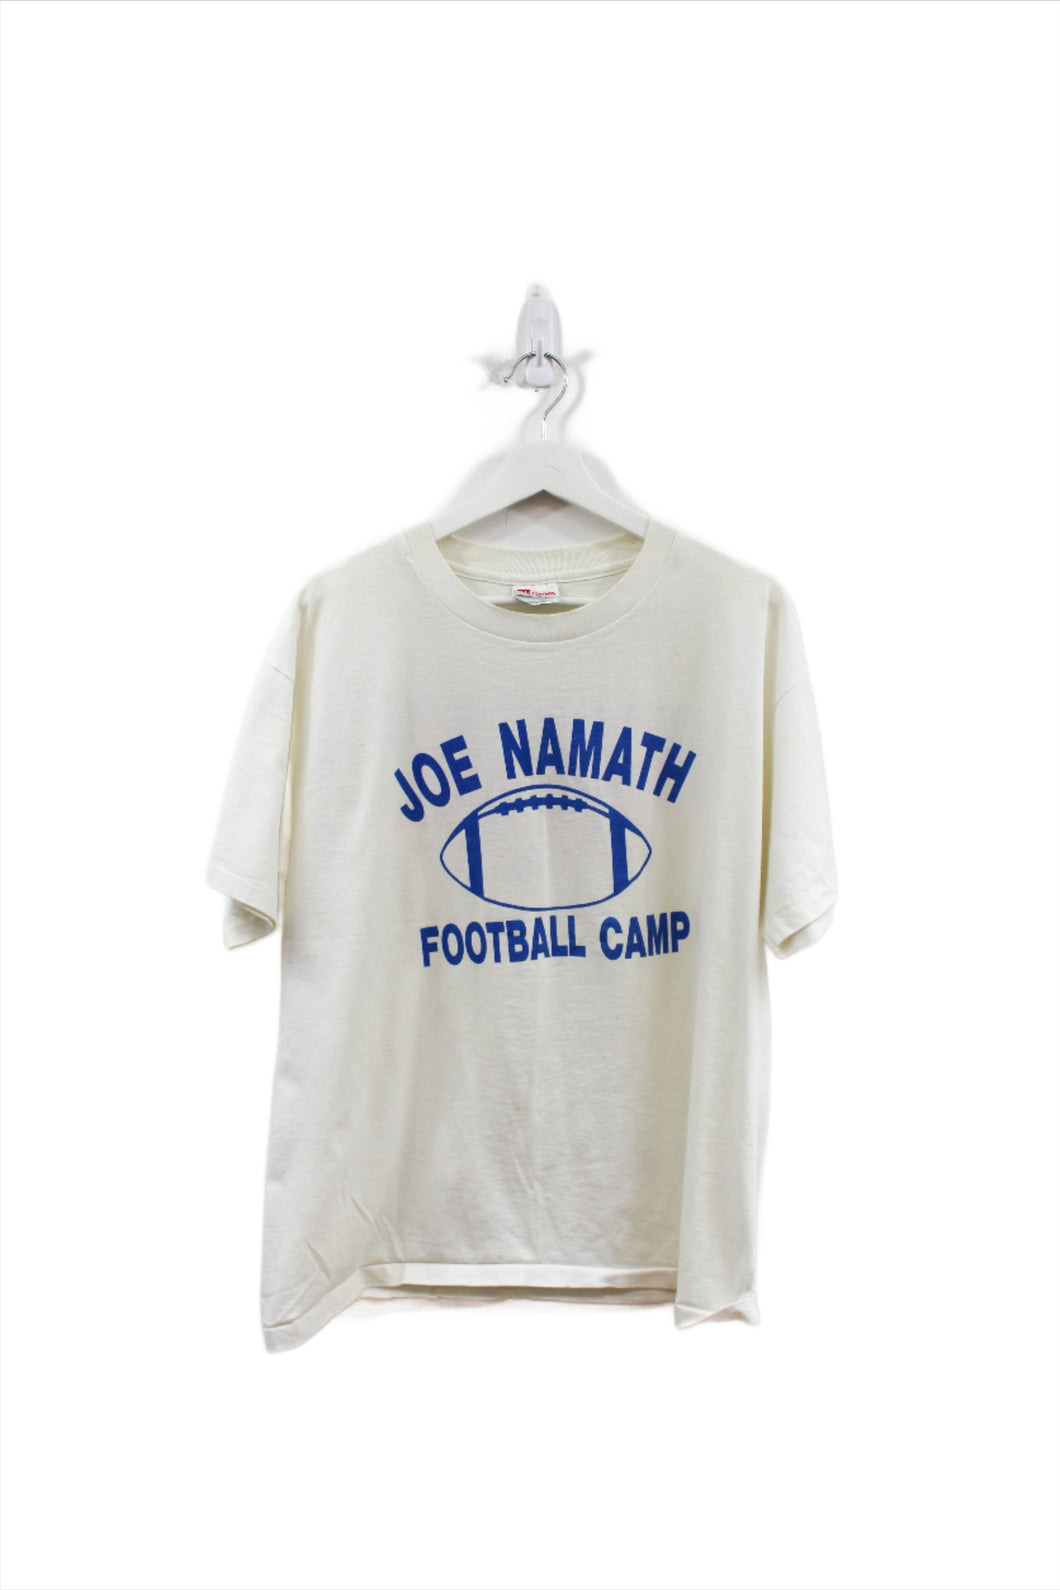 Z - Vintage Single Stitch NFL Joe Namath Football Camp Hanes Heavyweight Tee